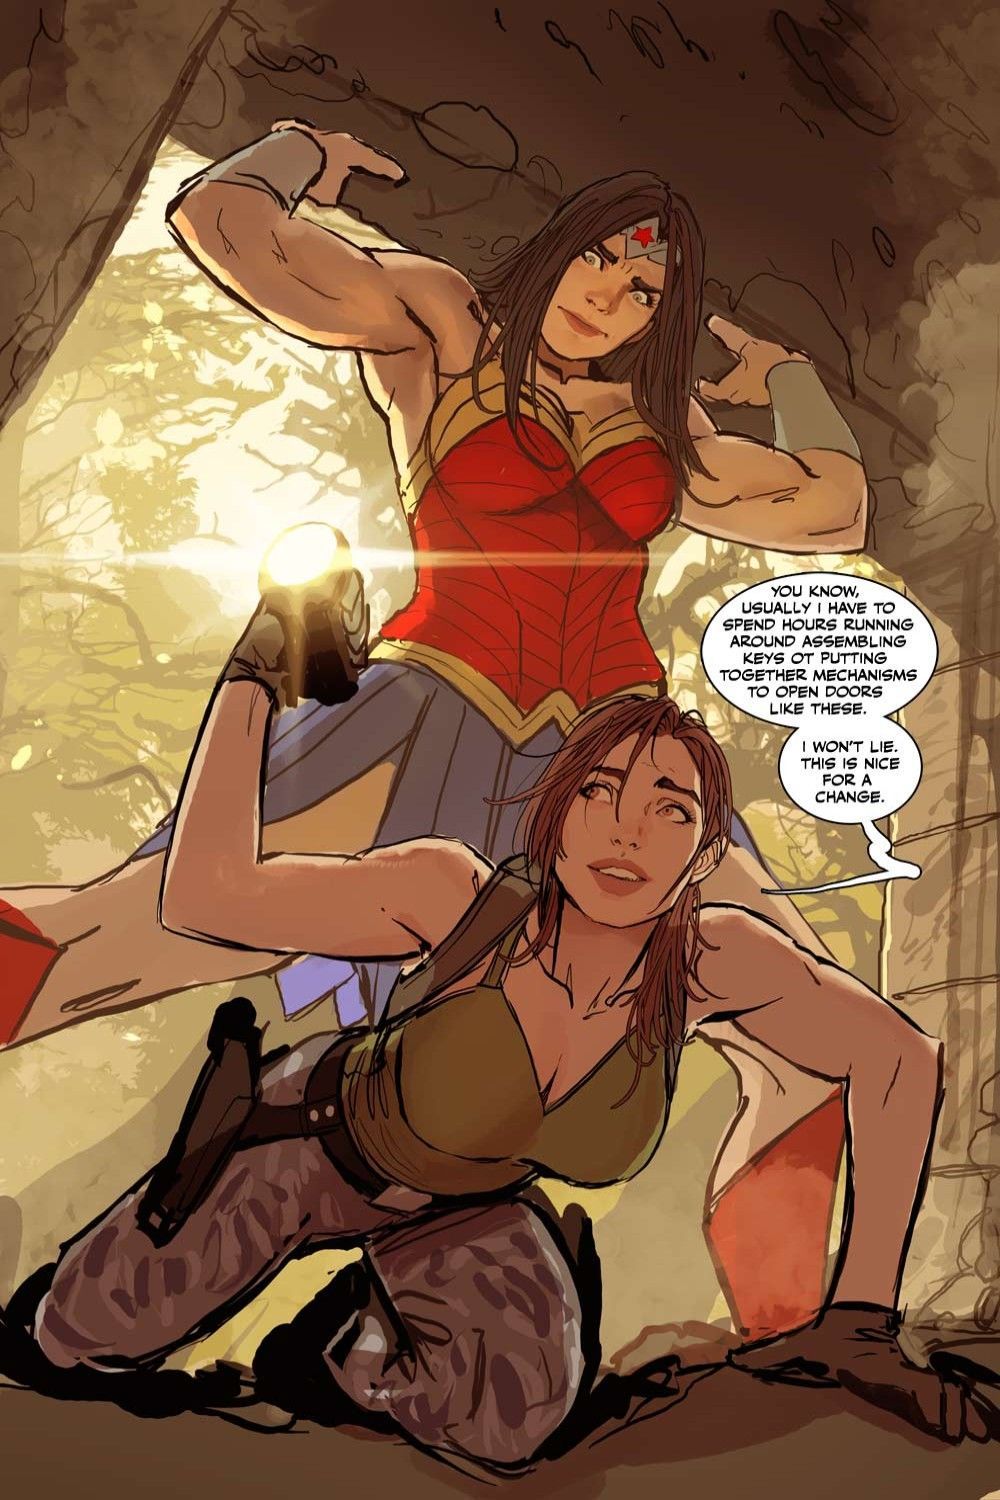 Diana X Lara: 10 Wonder Woman & Tomb Raider Fan Art Pictures We Love